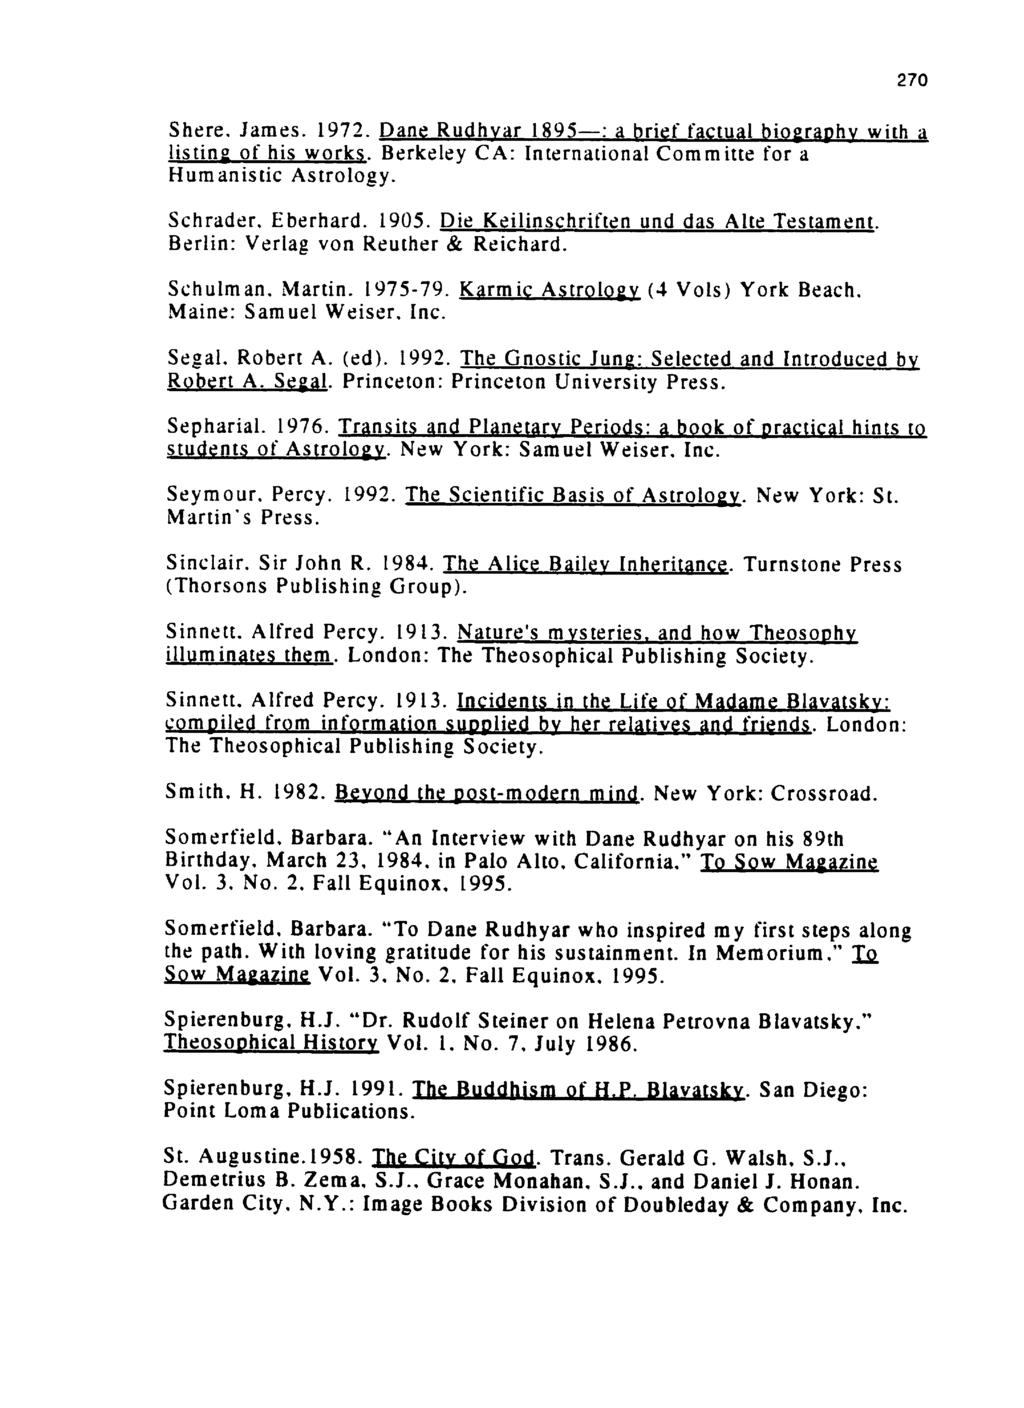 Shere. James. 1972. Dane Rudhvar 1895-: a brief factual bioera~hv with a listinp of his works. Berkeley CA: International Comm ittc for a Hum anis tic Astrology. Schrader. Eberhard. 1905.